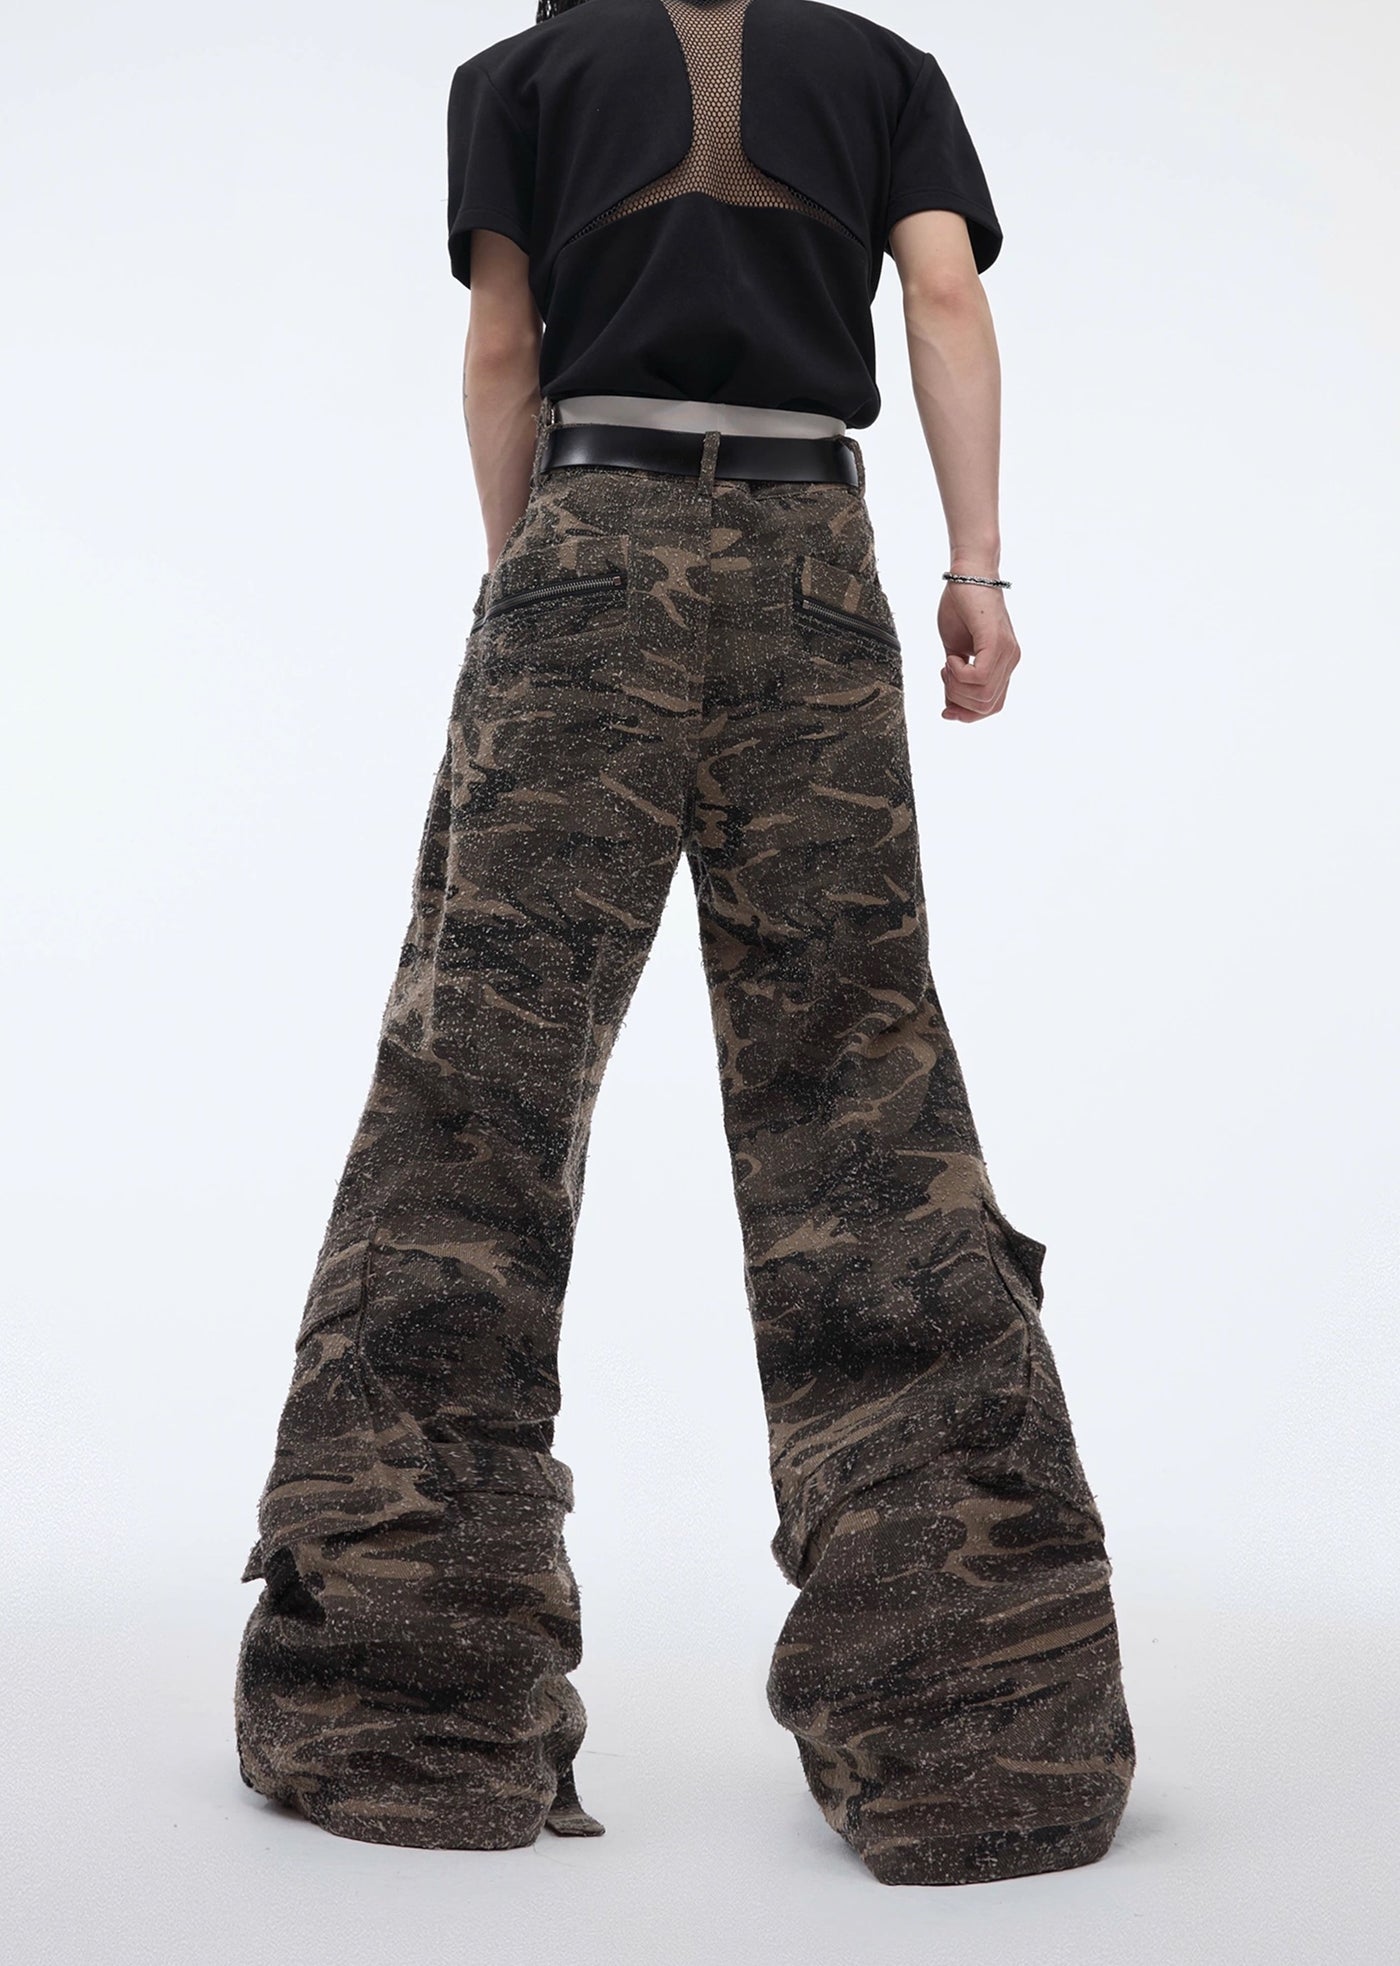 【Culture E】Dark camouflage pattern coloring laces wide flare silhouette denim pants  CE0124